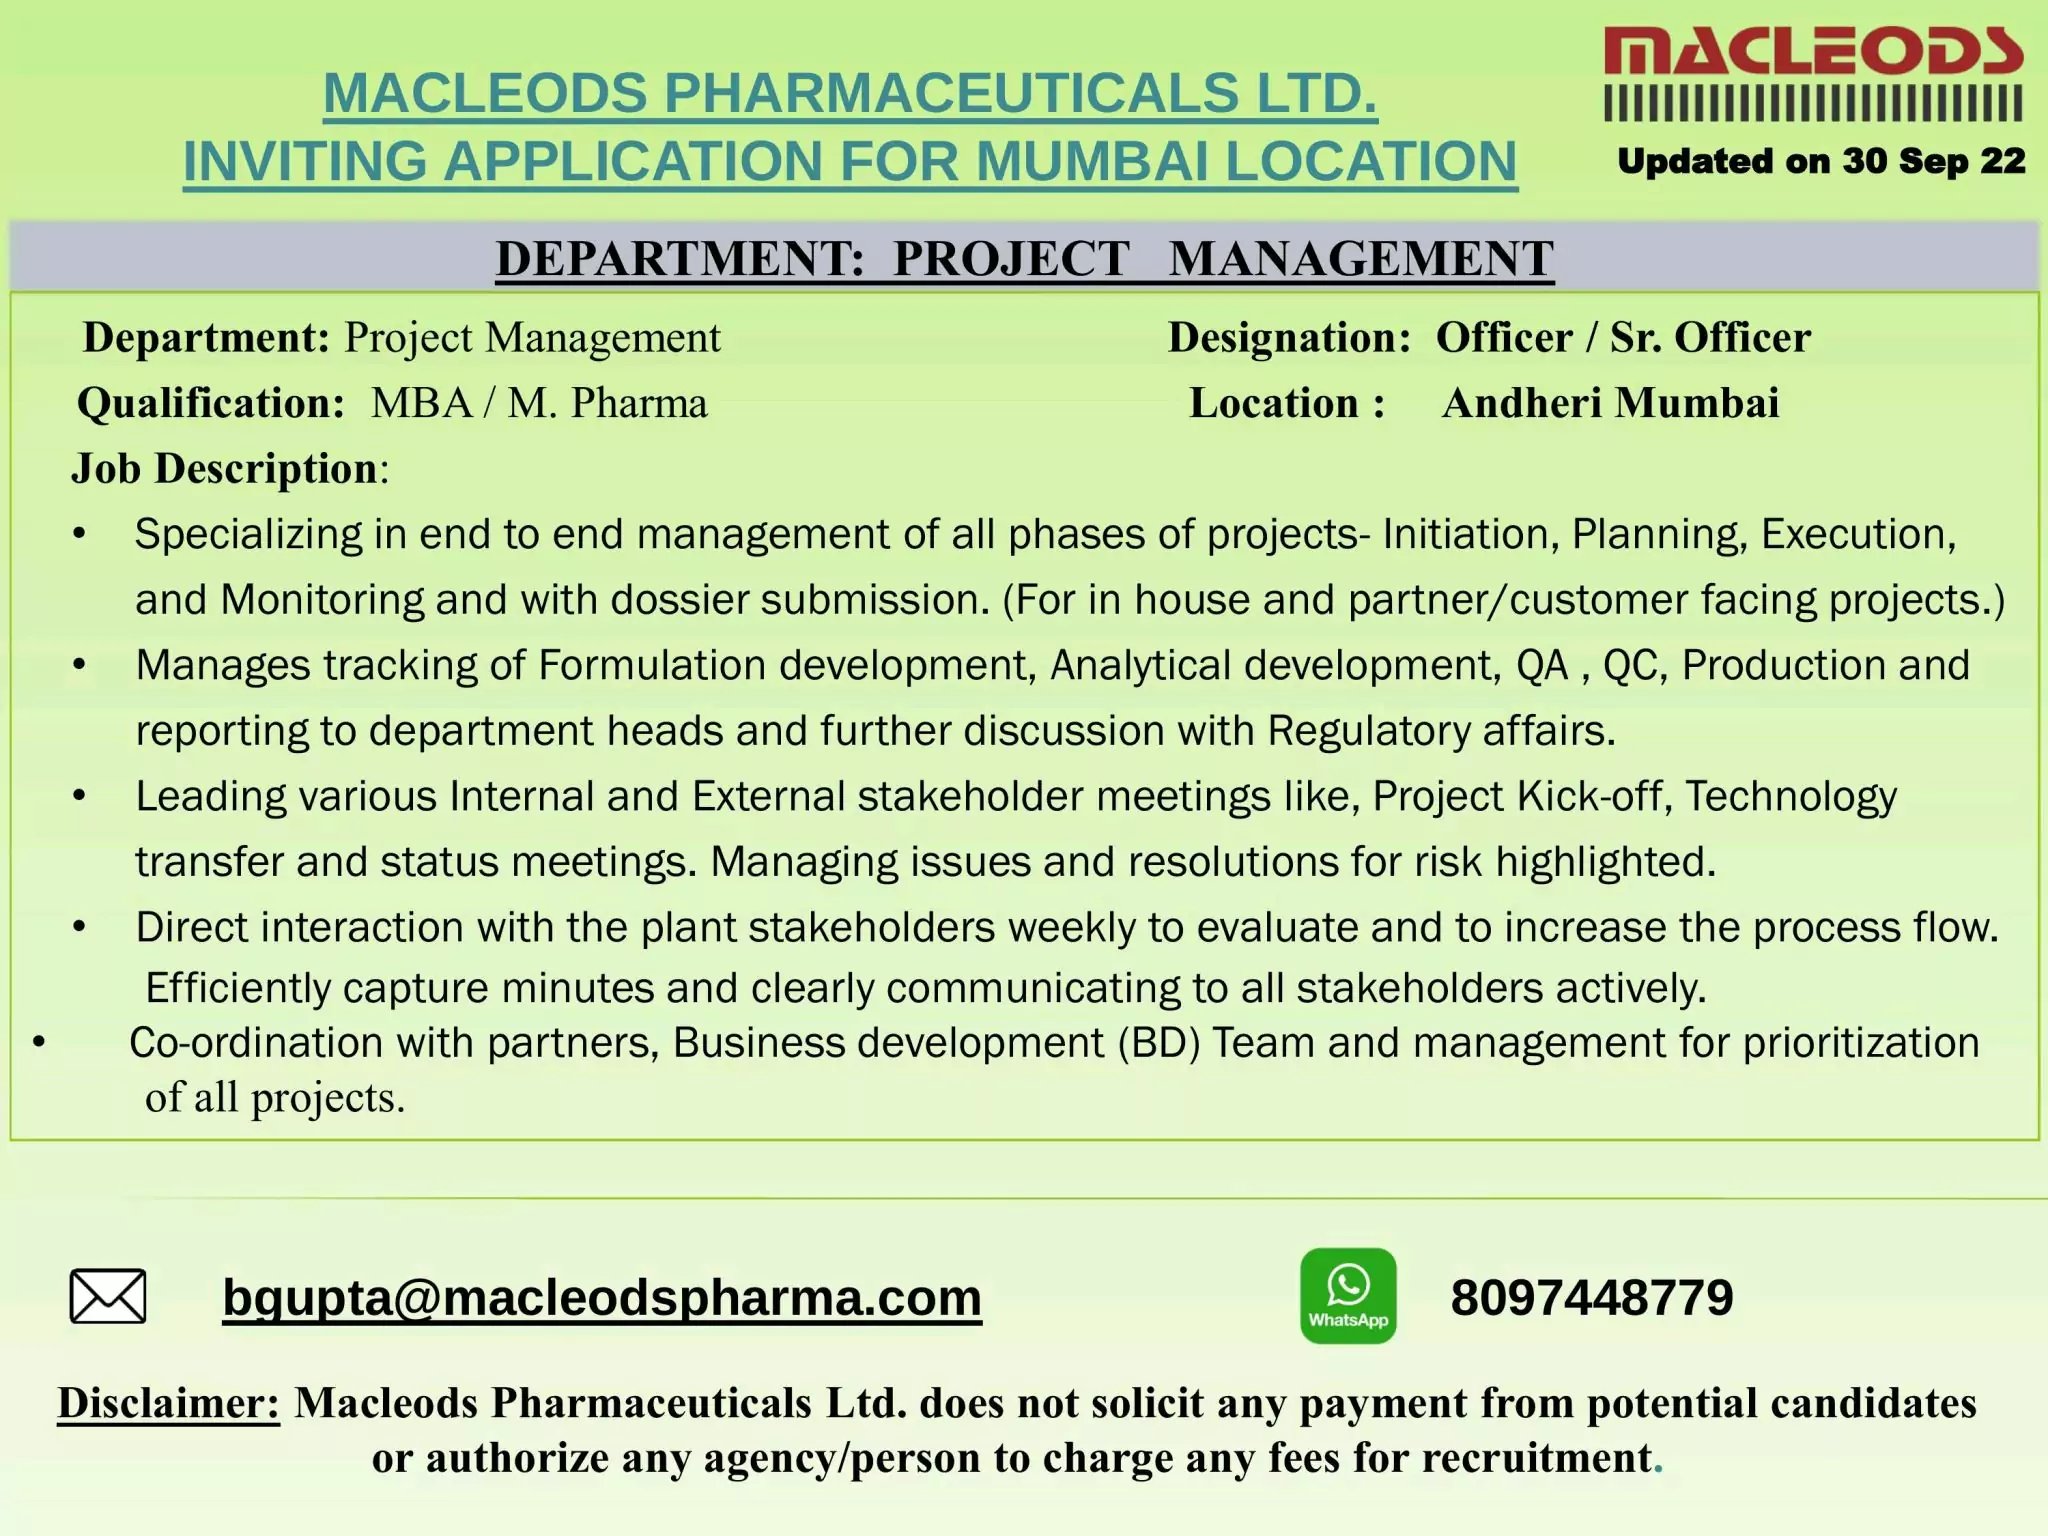 %titl project management job vacancies at mumbai macleods pharma4161841998494453394